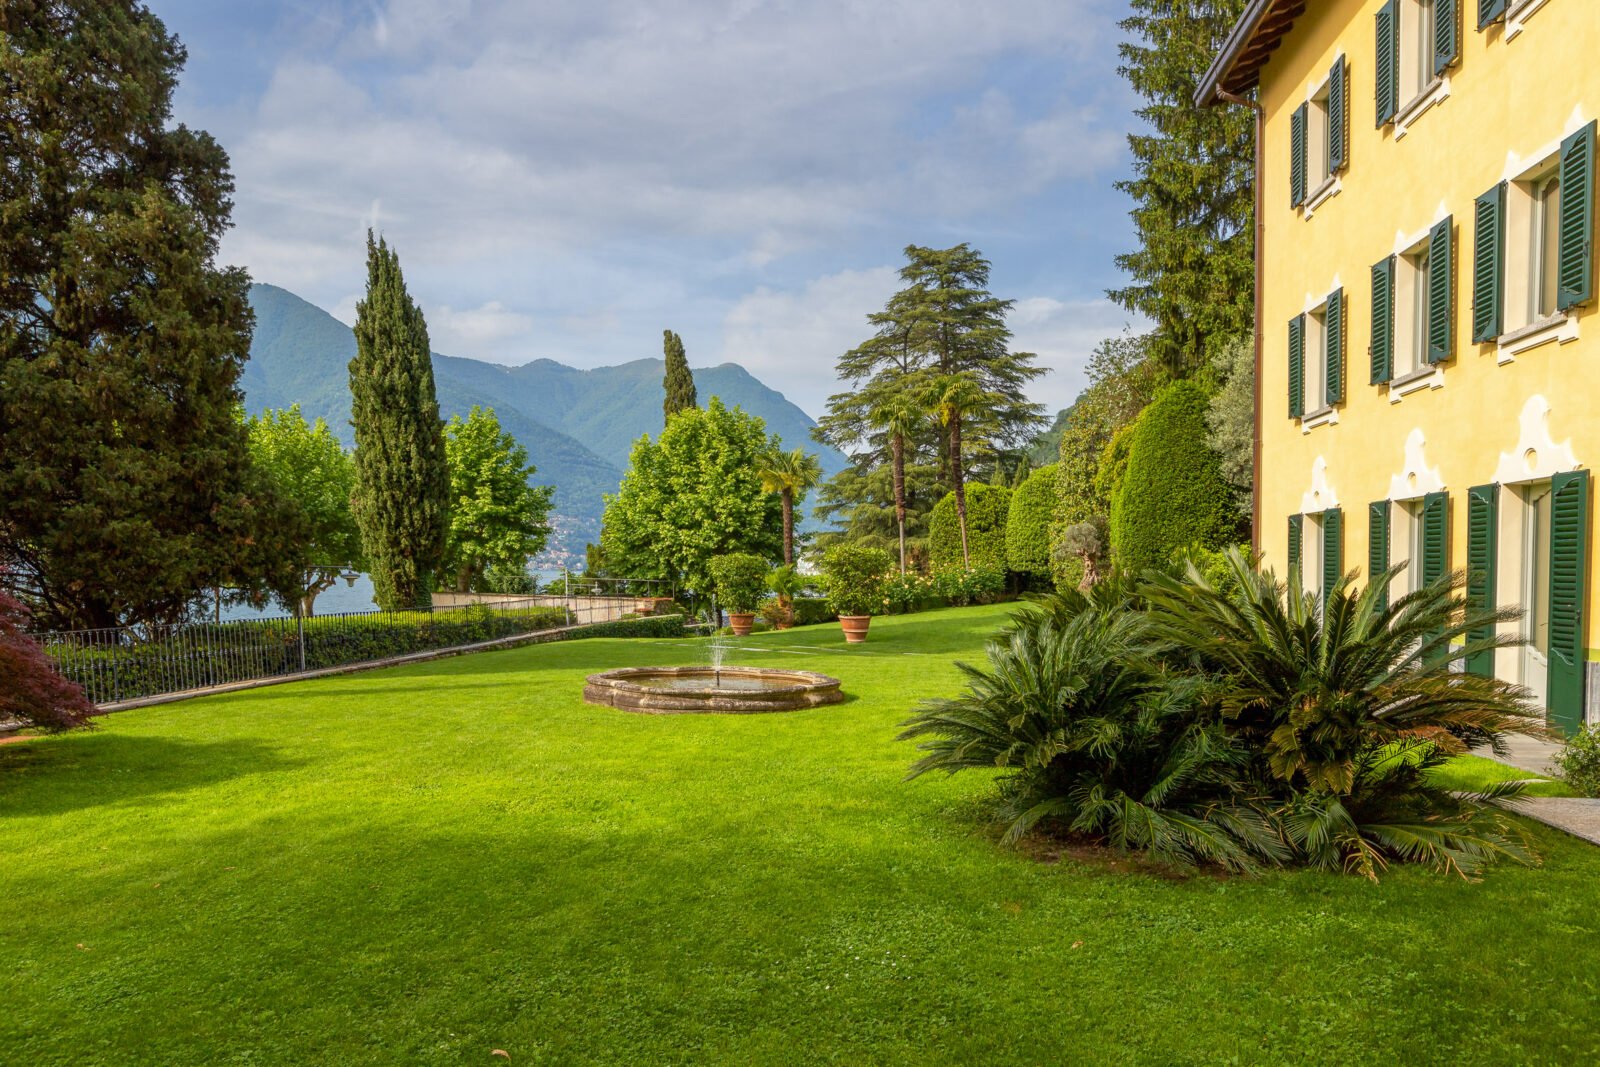 Francis York Waterfront Villa on Lake Como, Italy9.jpg